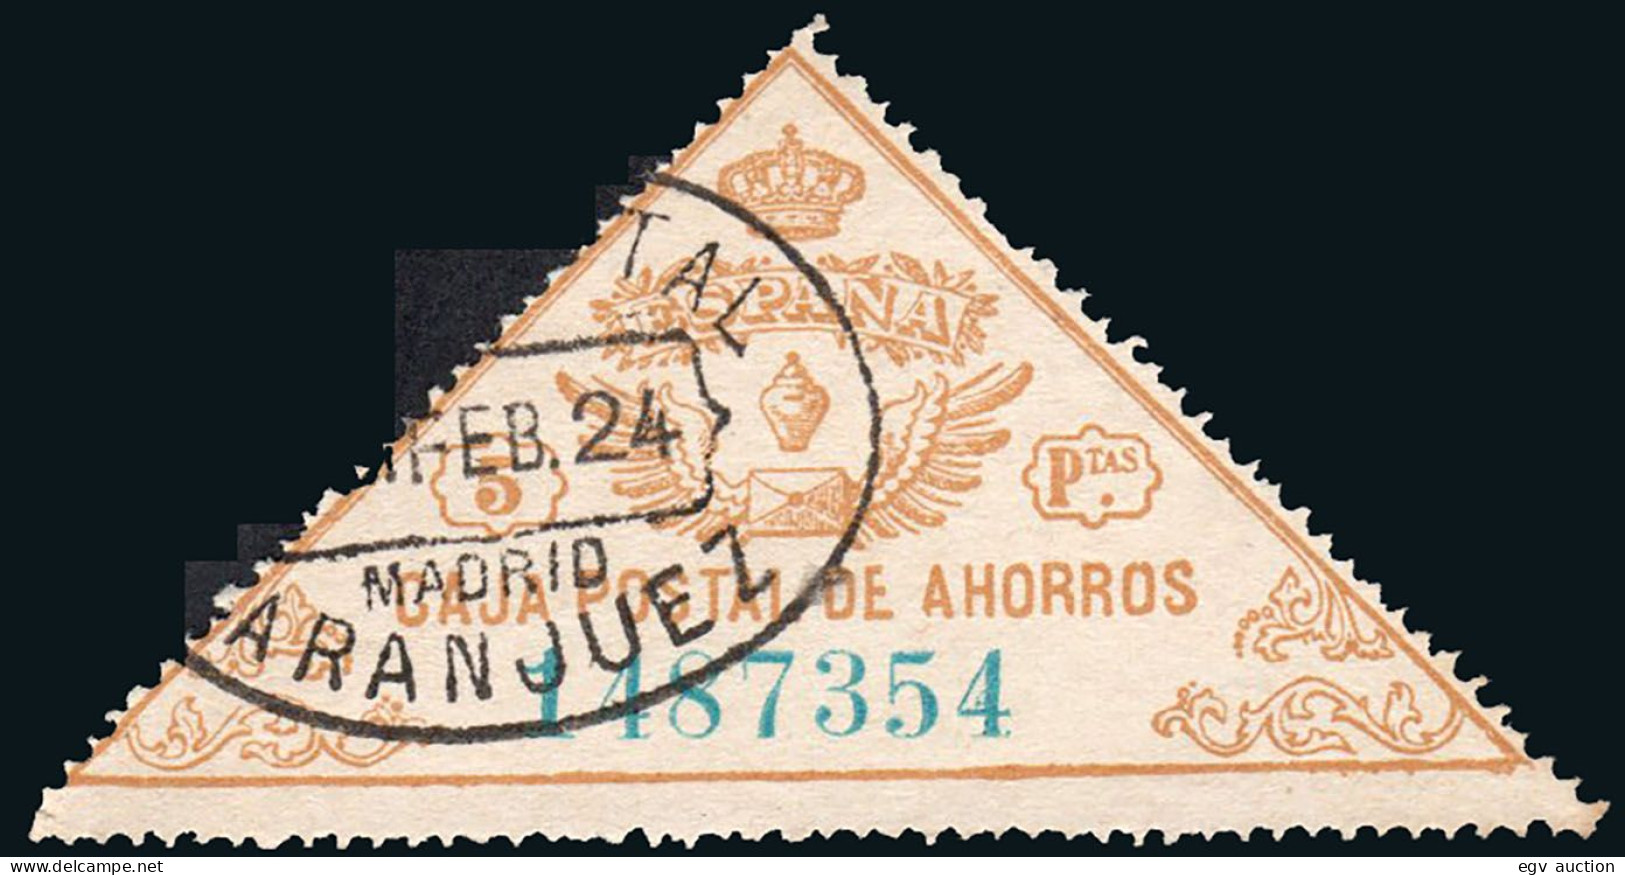 Madrid - Caja Postal Ahorros - Gálvez 5 - Mat "Giro Postal - Aranjuez" - Revenue Stamps